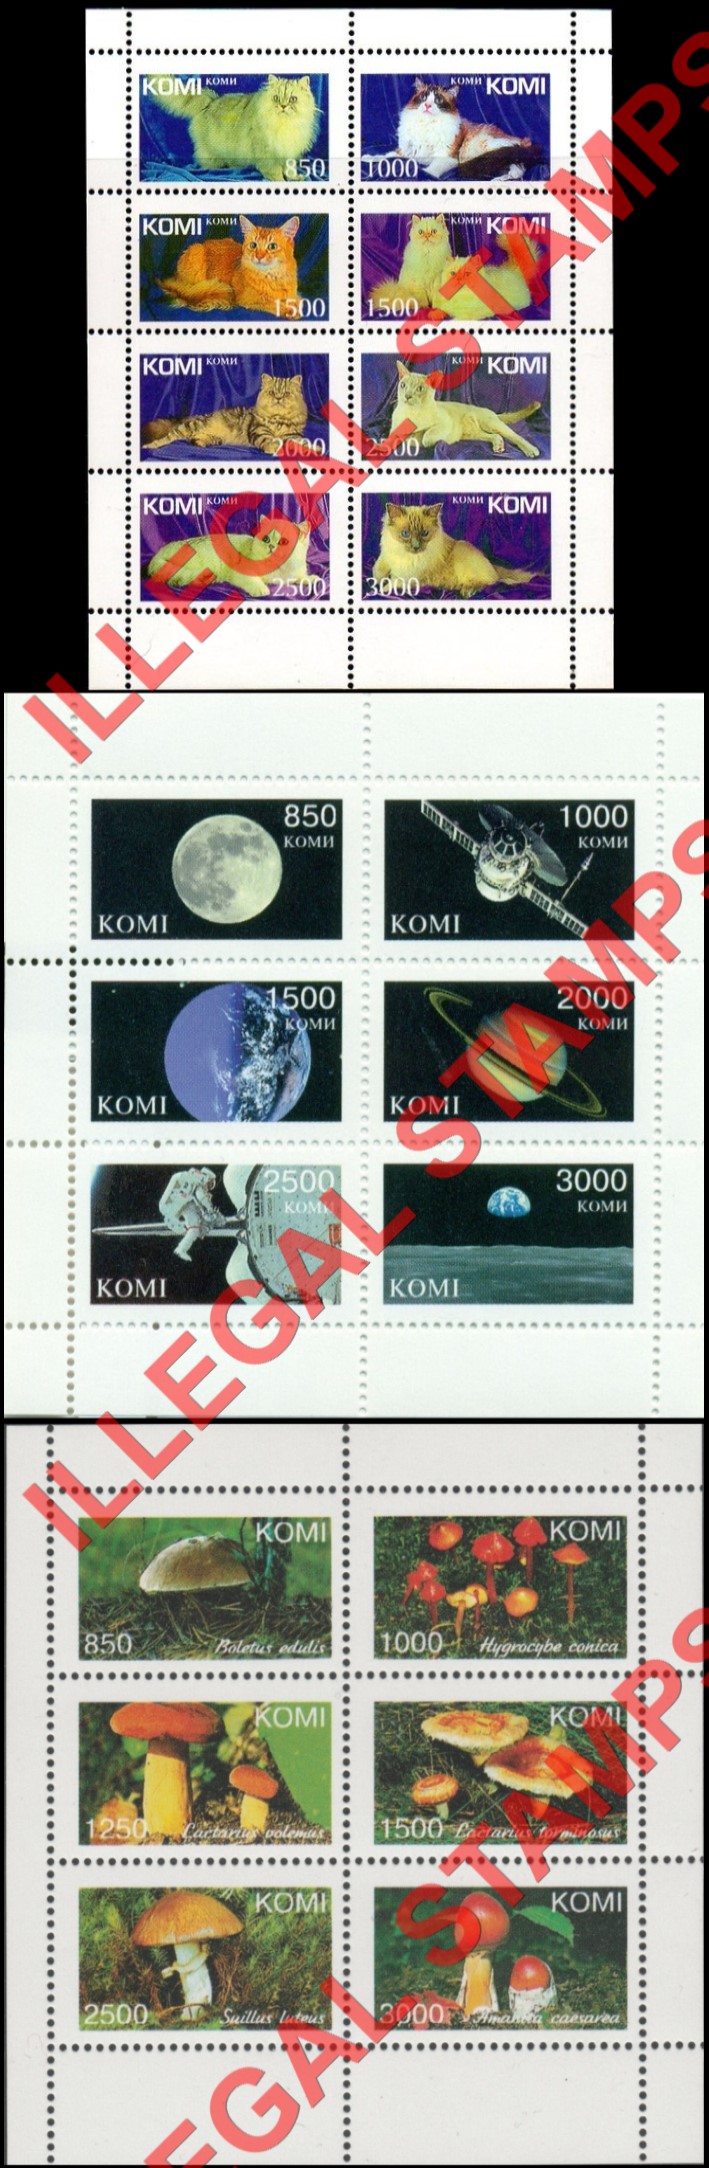 Komi Republic 1997 Counterfeit Illegal Stamps (Part 1)